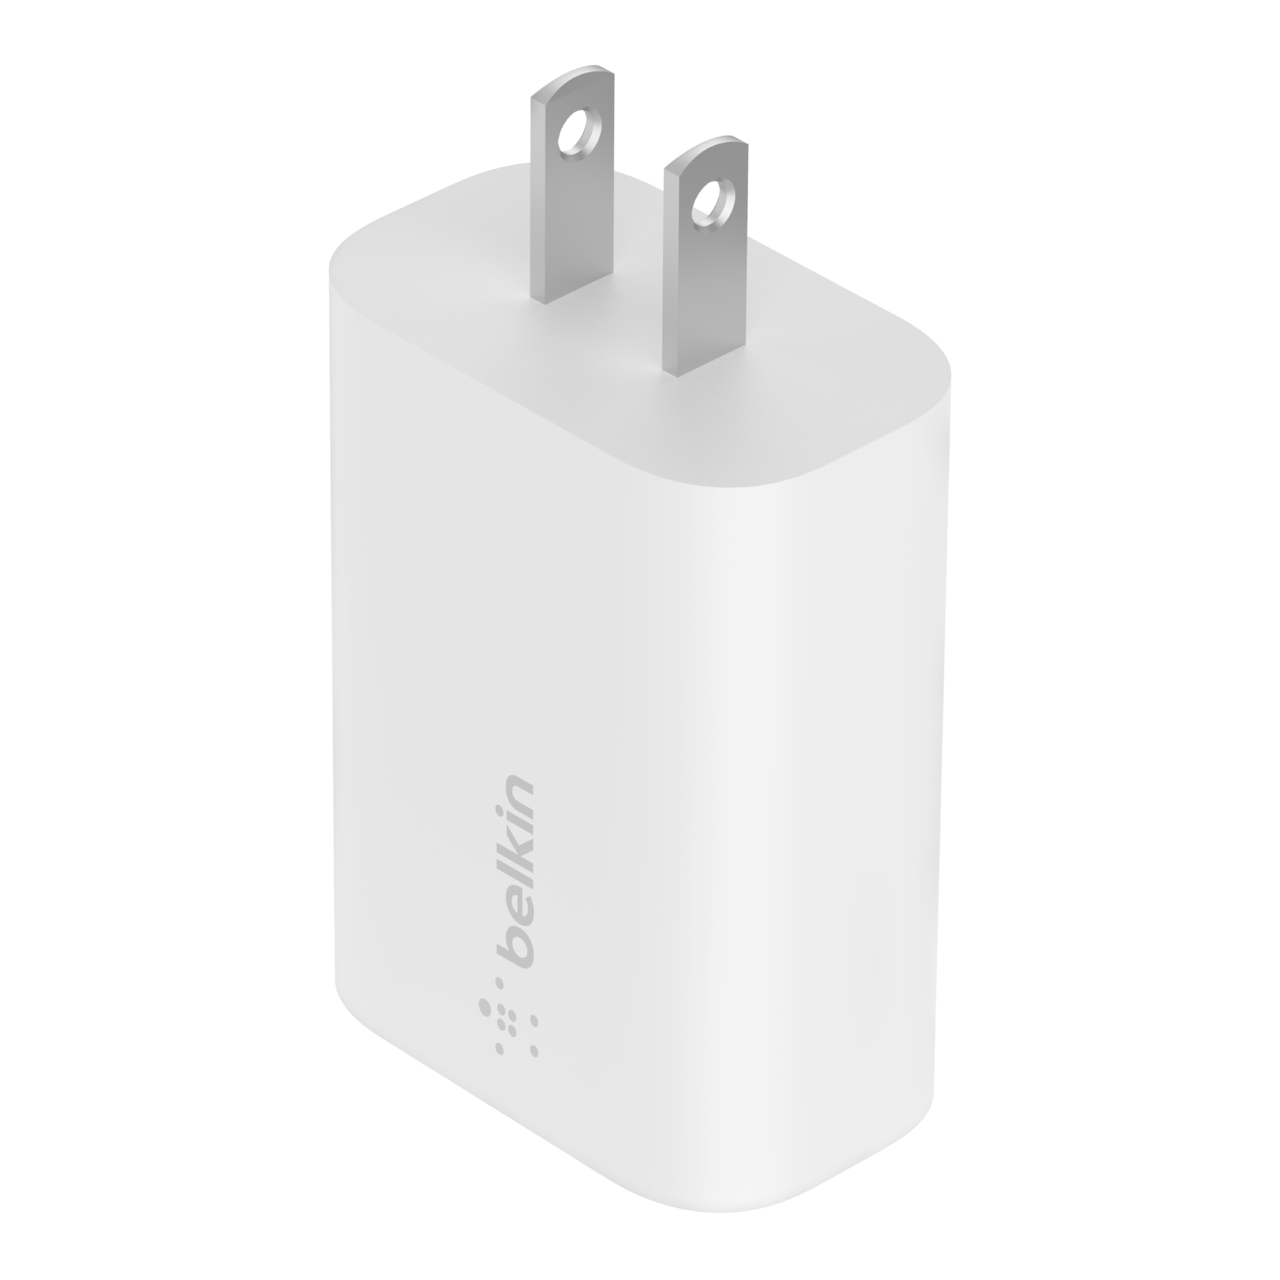 Belkin 25-Watt USB-C Wall Charger, Power Delivery PPS Fast